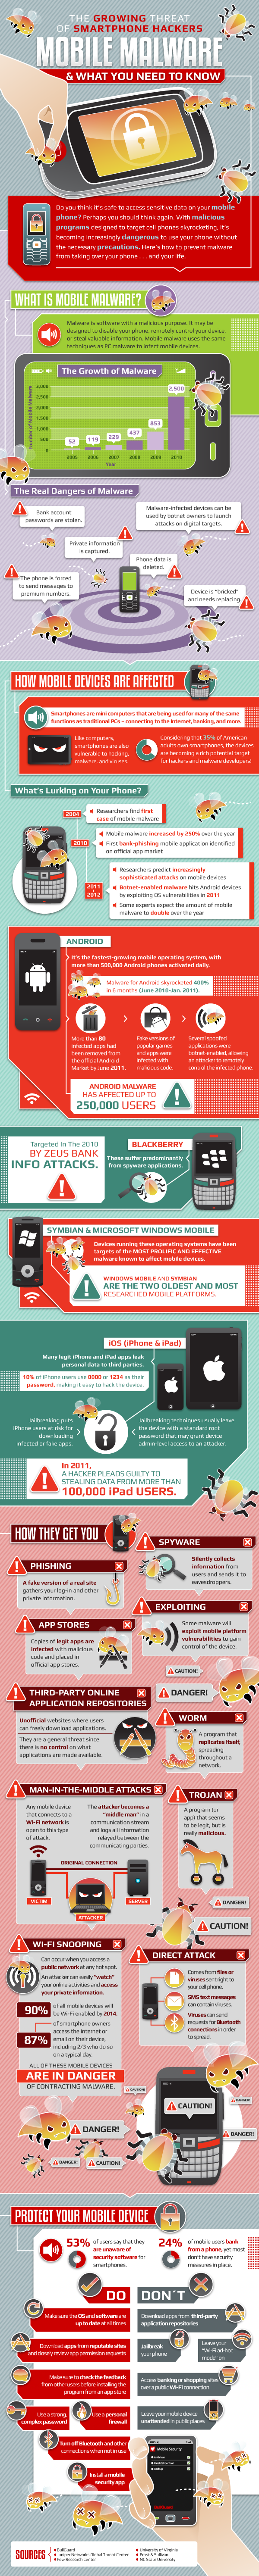 Mobile Malware infographic